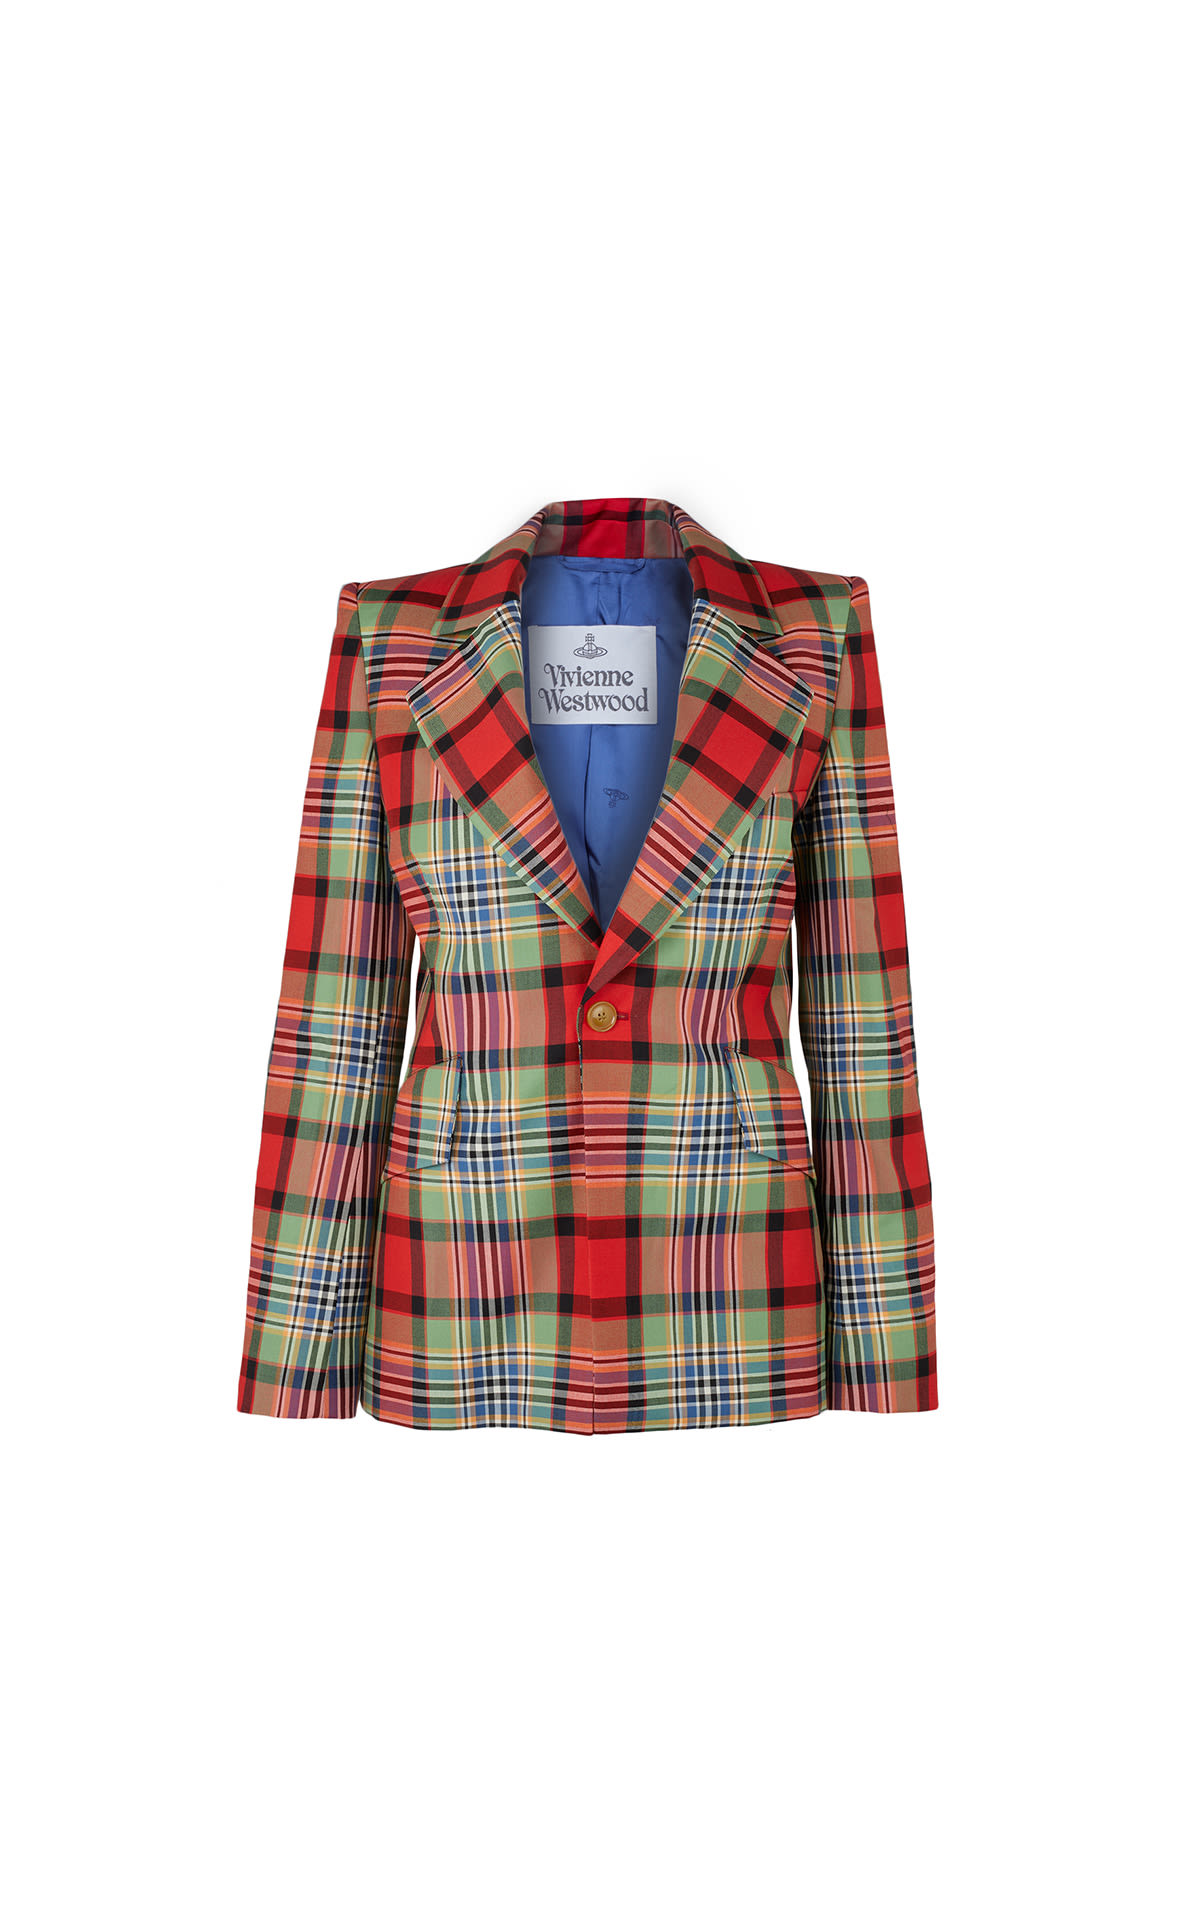 Vivienne Westwood Tratan jacket for women